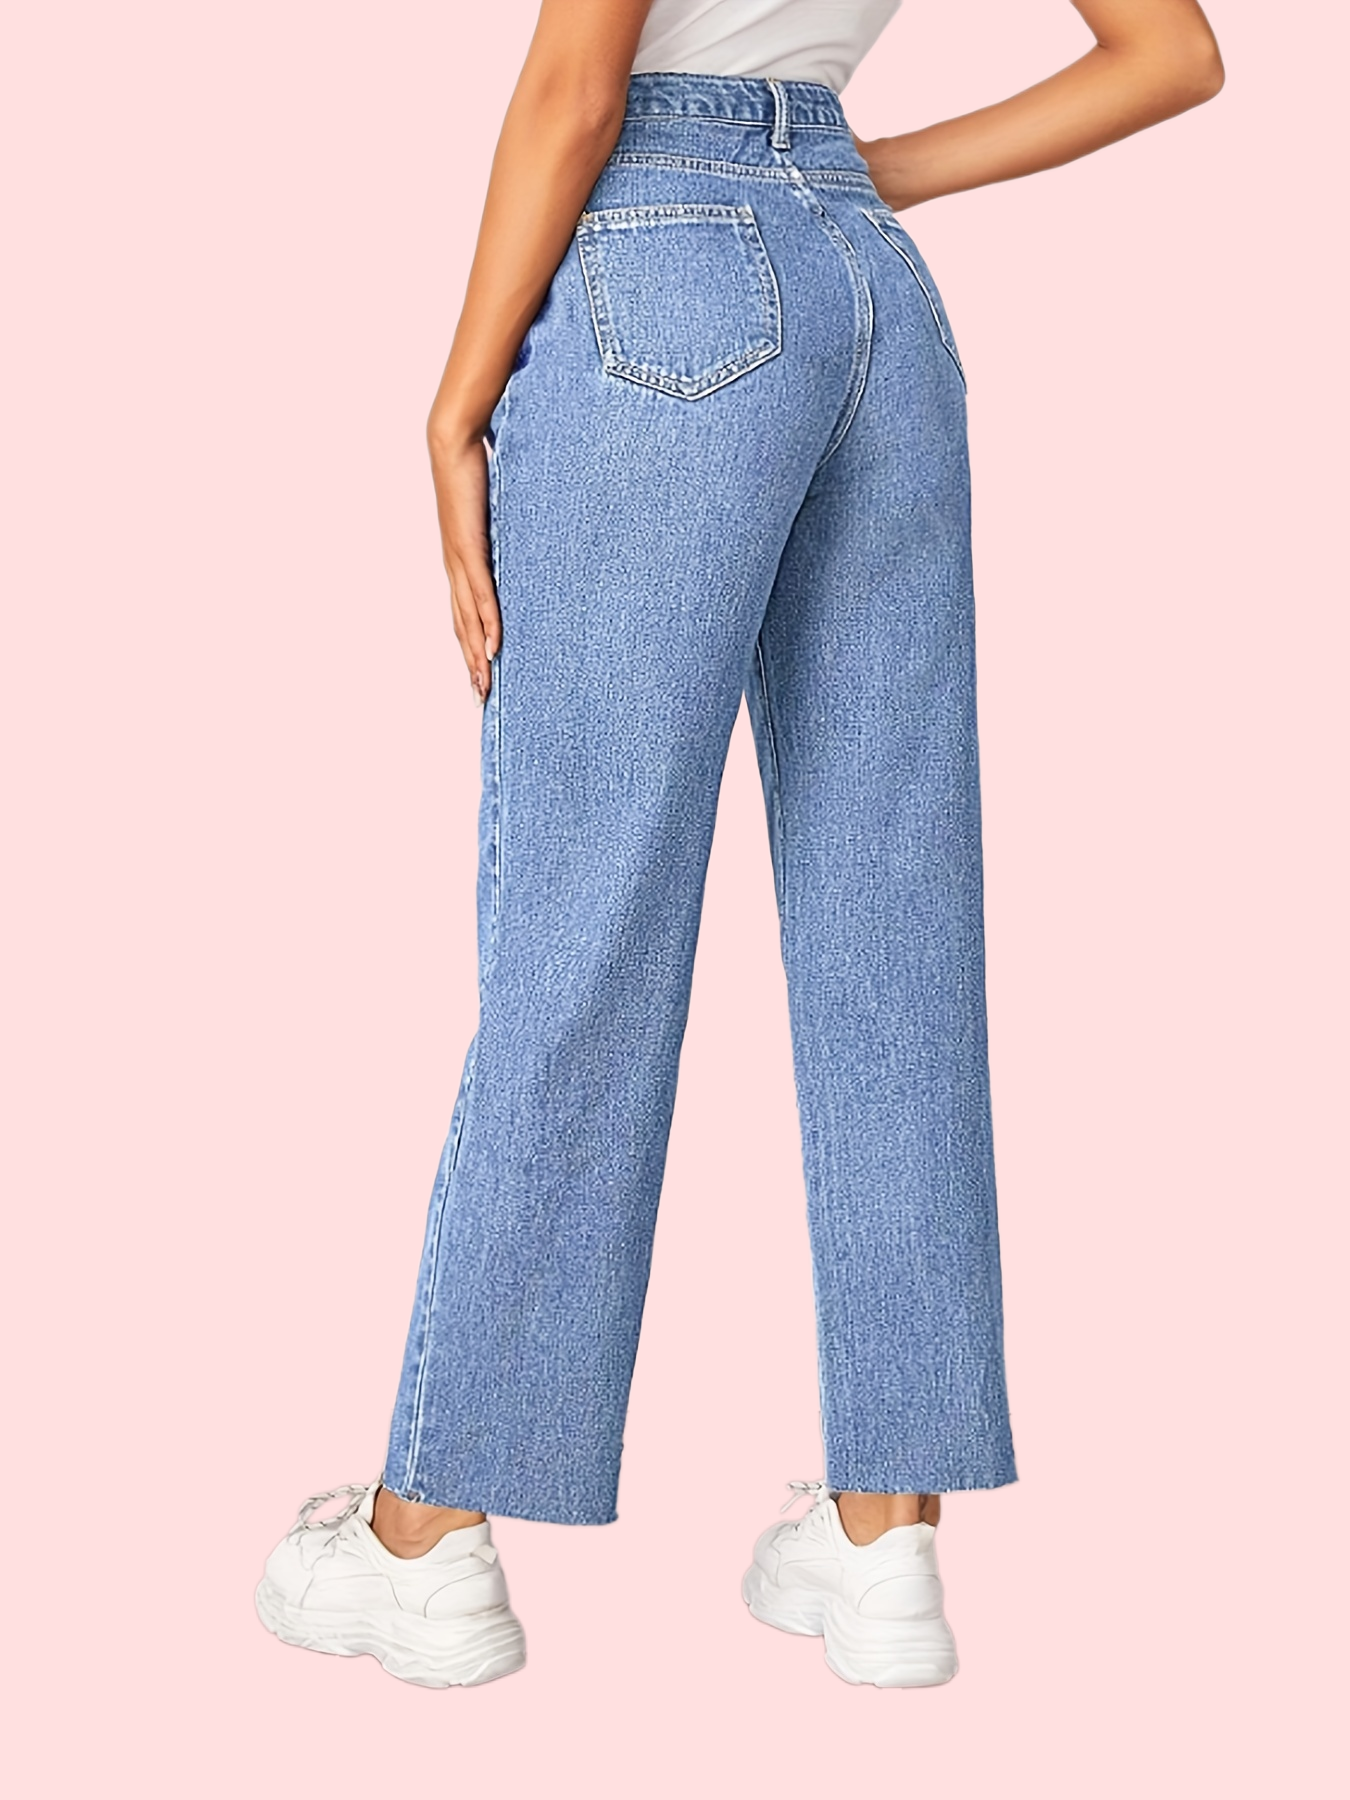 「binfenxie」Blue High Waist Straight Jeans, Loose Fit Wide Legs Slash Pockets High Rise Denim Pants, Women's Denim Jeans & Clothing